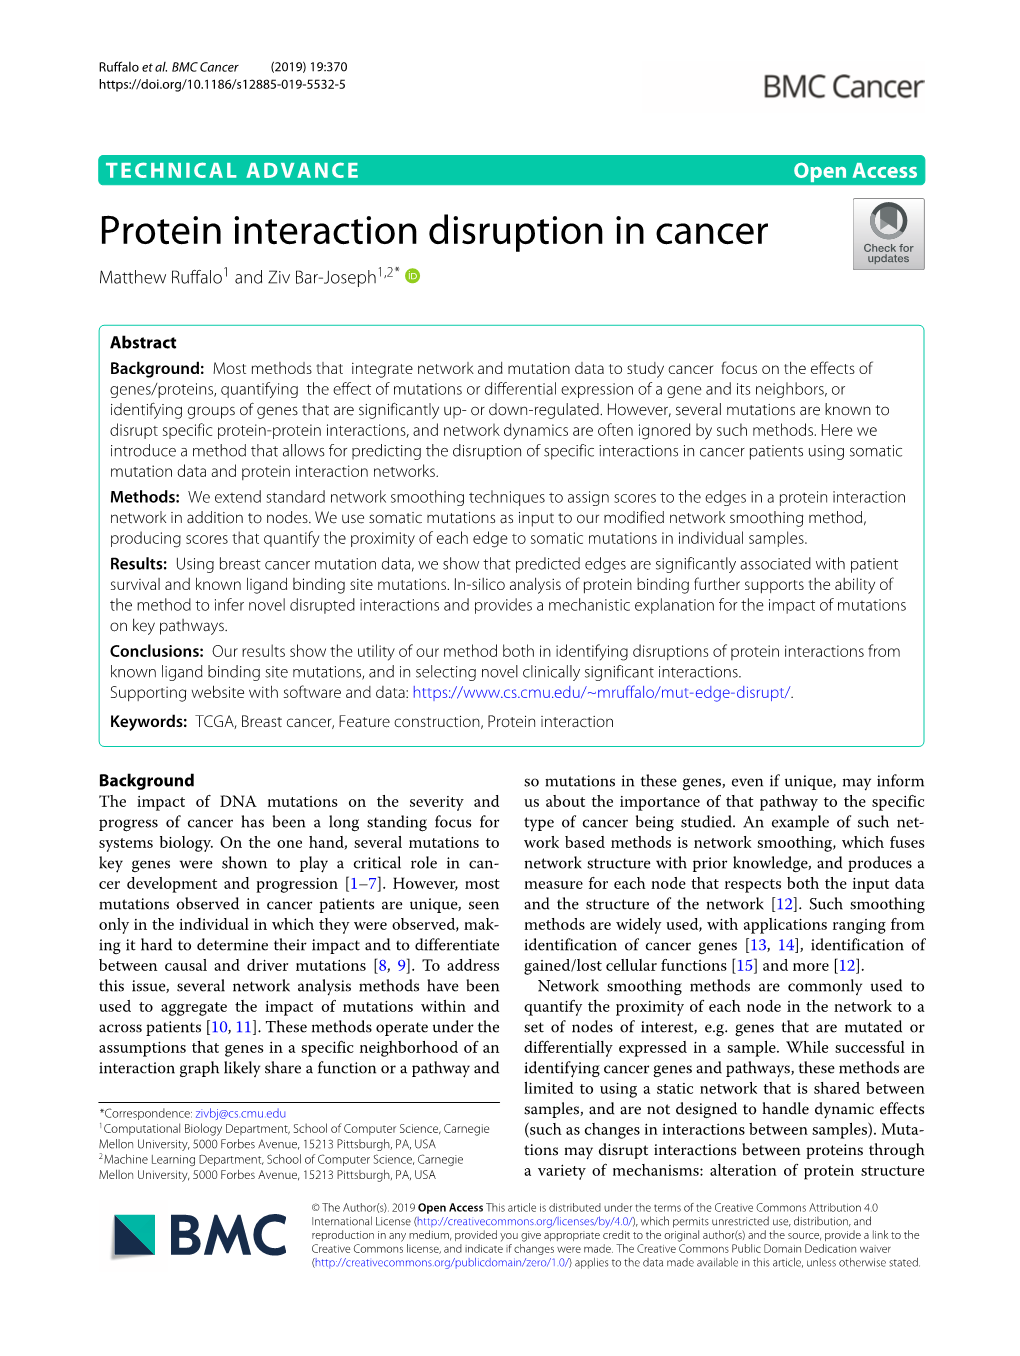 Protein Interaction Disruption in Cancer Matthew Ruffalo1 and Ziv Bar-Joseph1,2*